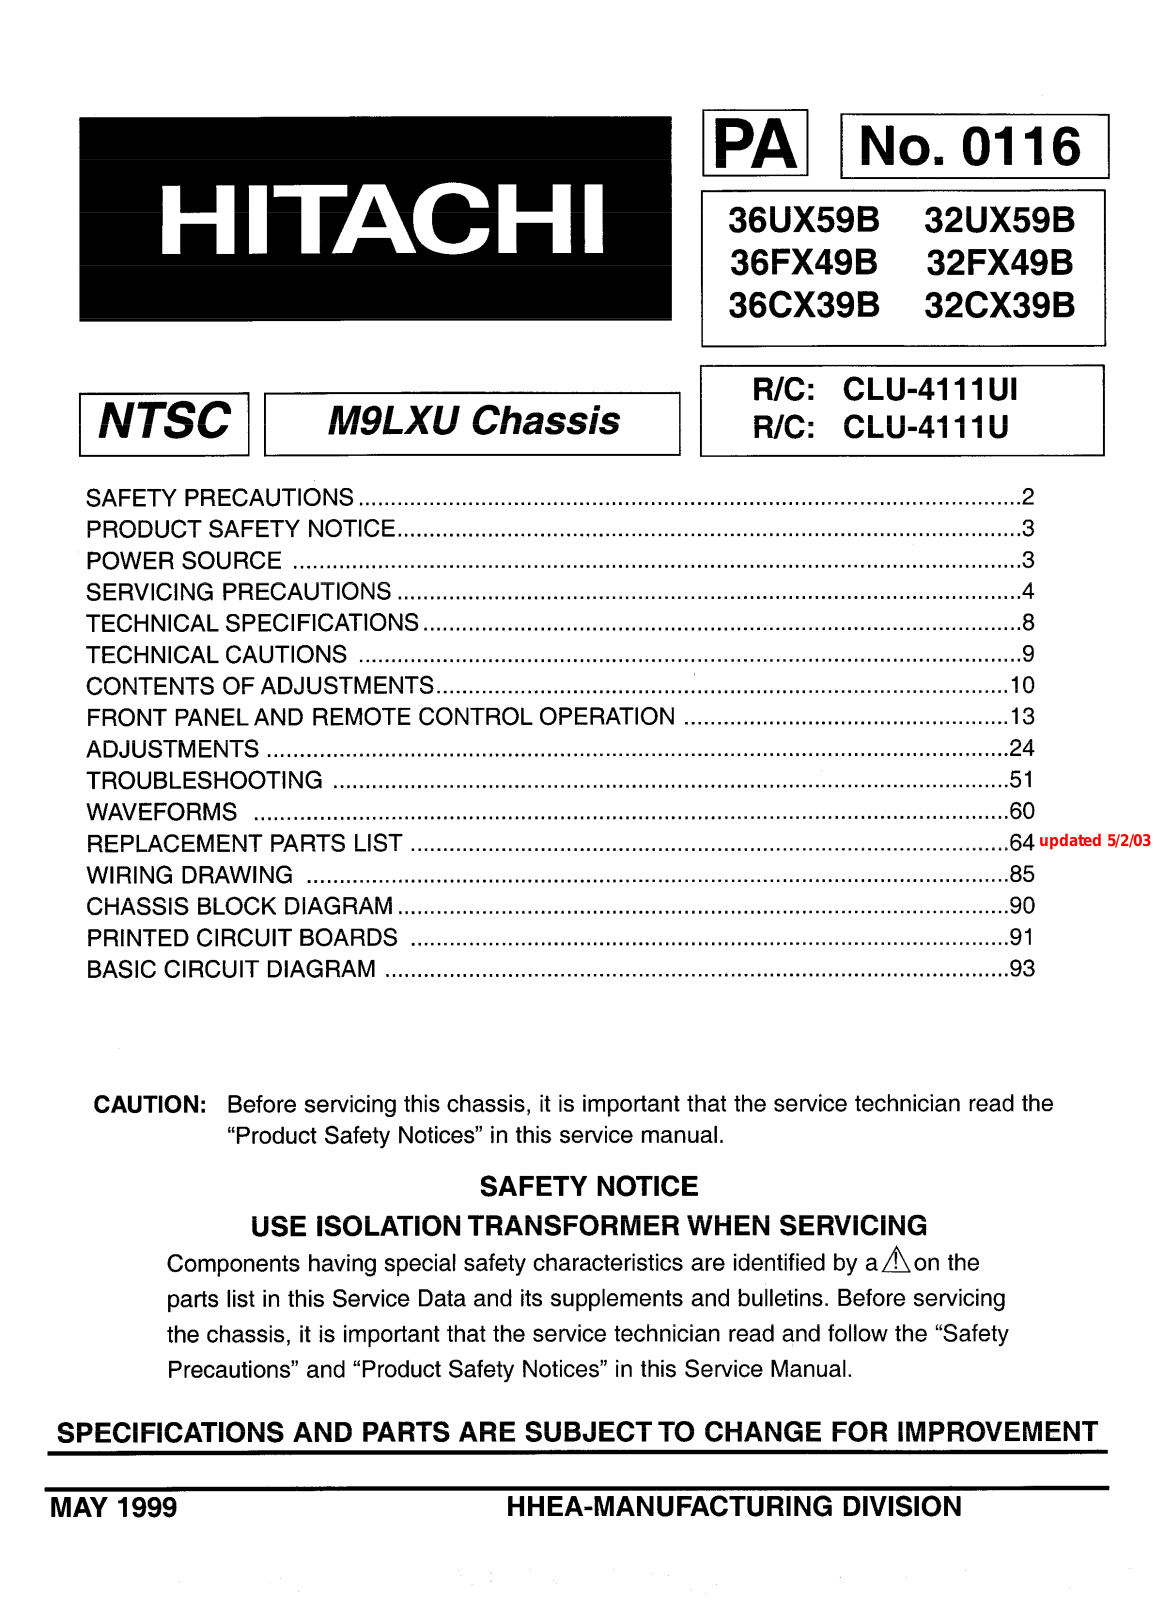 Hitachi pa0116 schematic